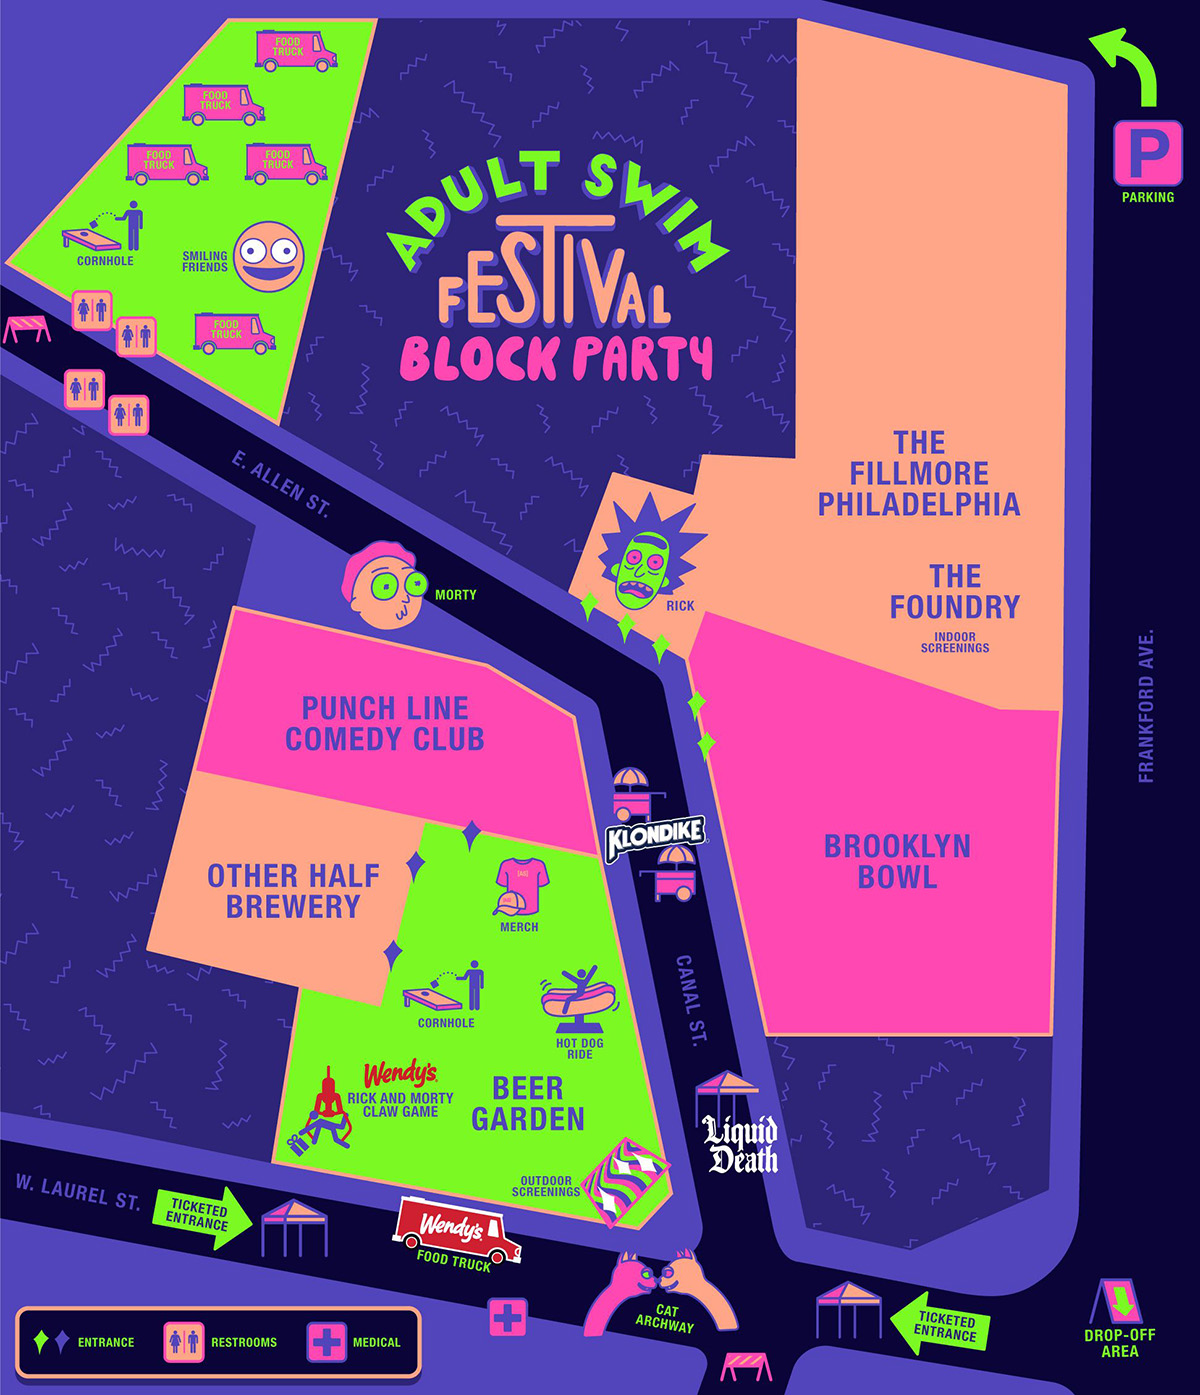 Adult Swim Festival Block Party 2022 - Festival Map